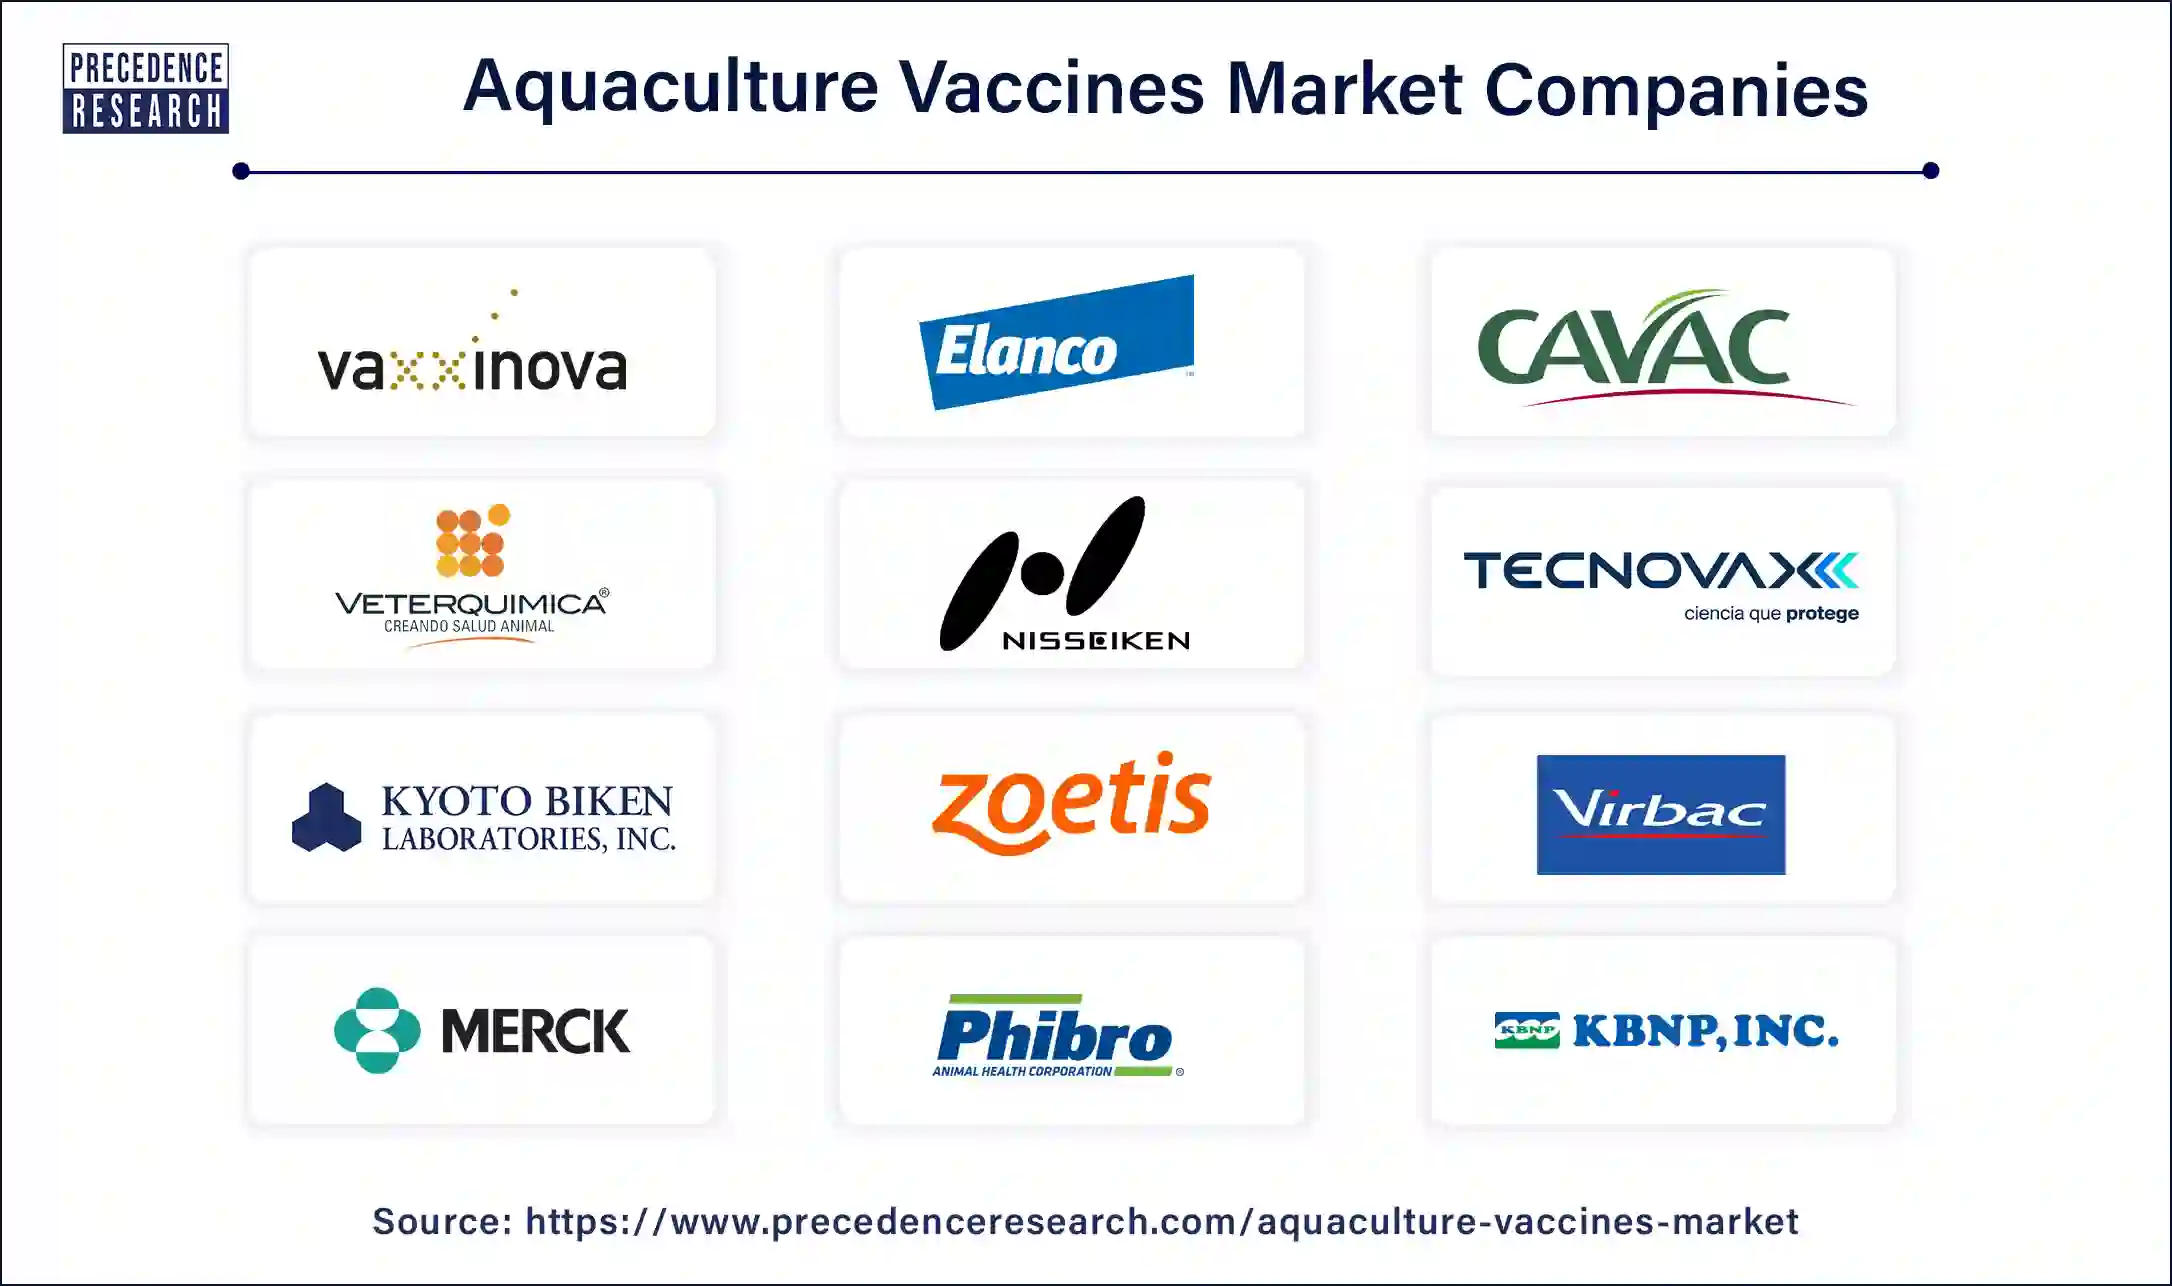 Aquaculture Vaccines Companies